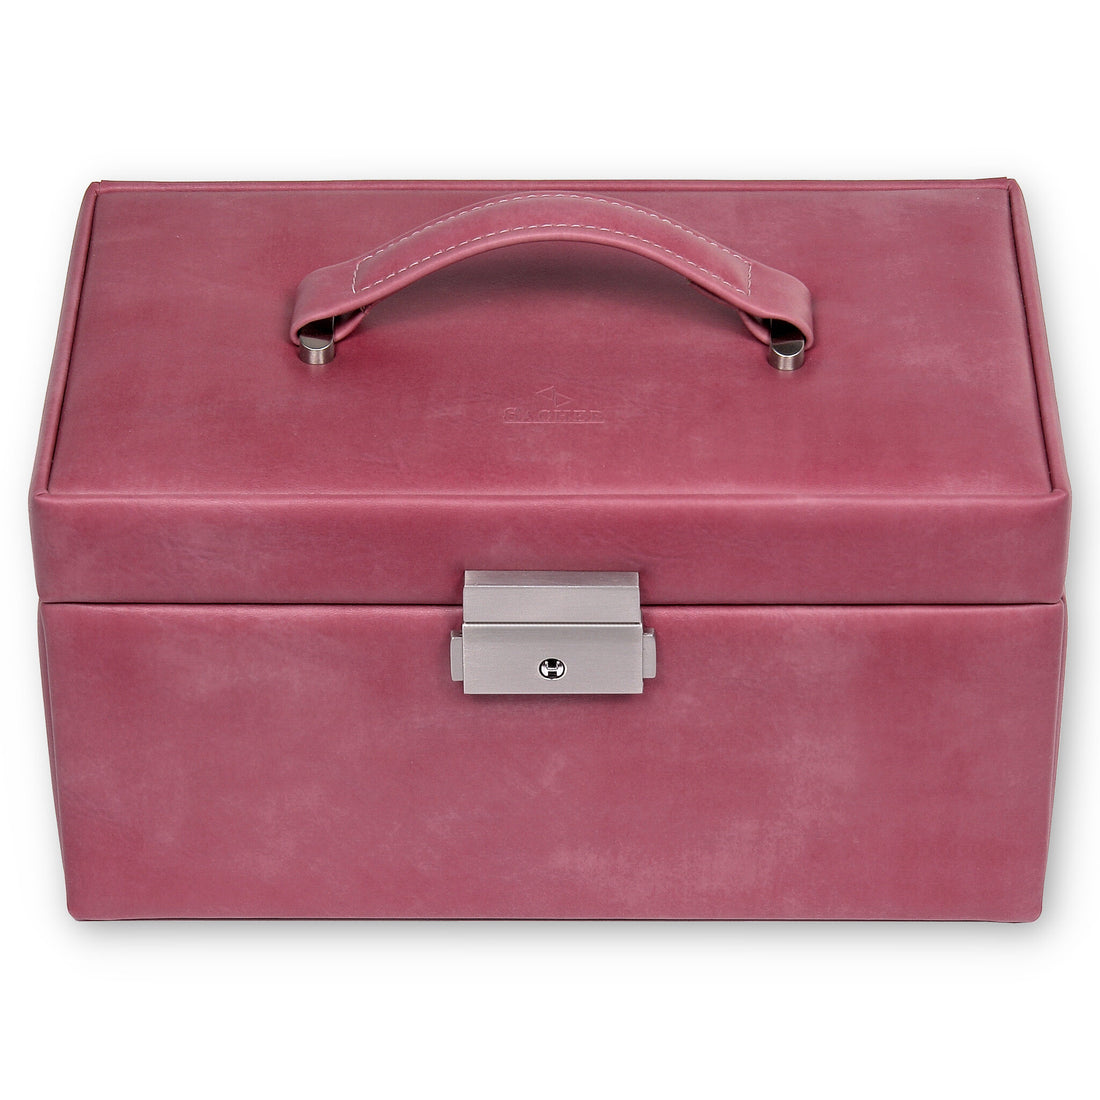 Schmuckkasten Elly pastello / alt 1846 – SACHER Offizieller Manufaktur rosé | Store